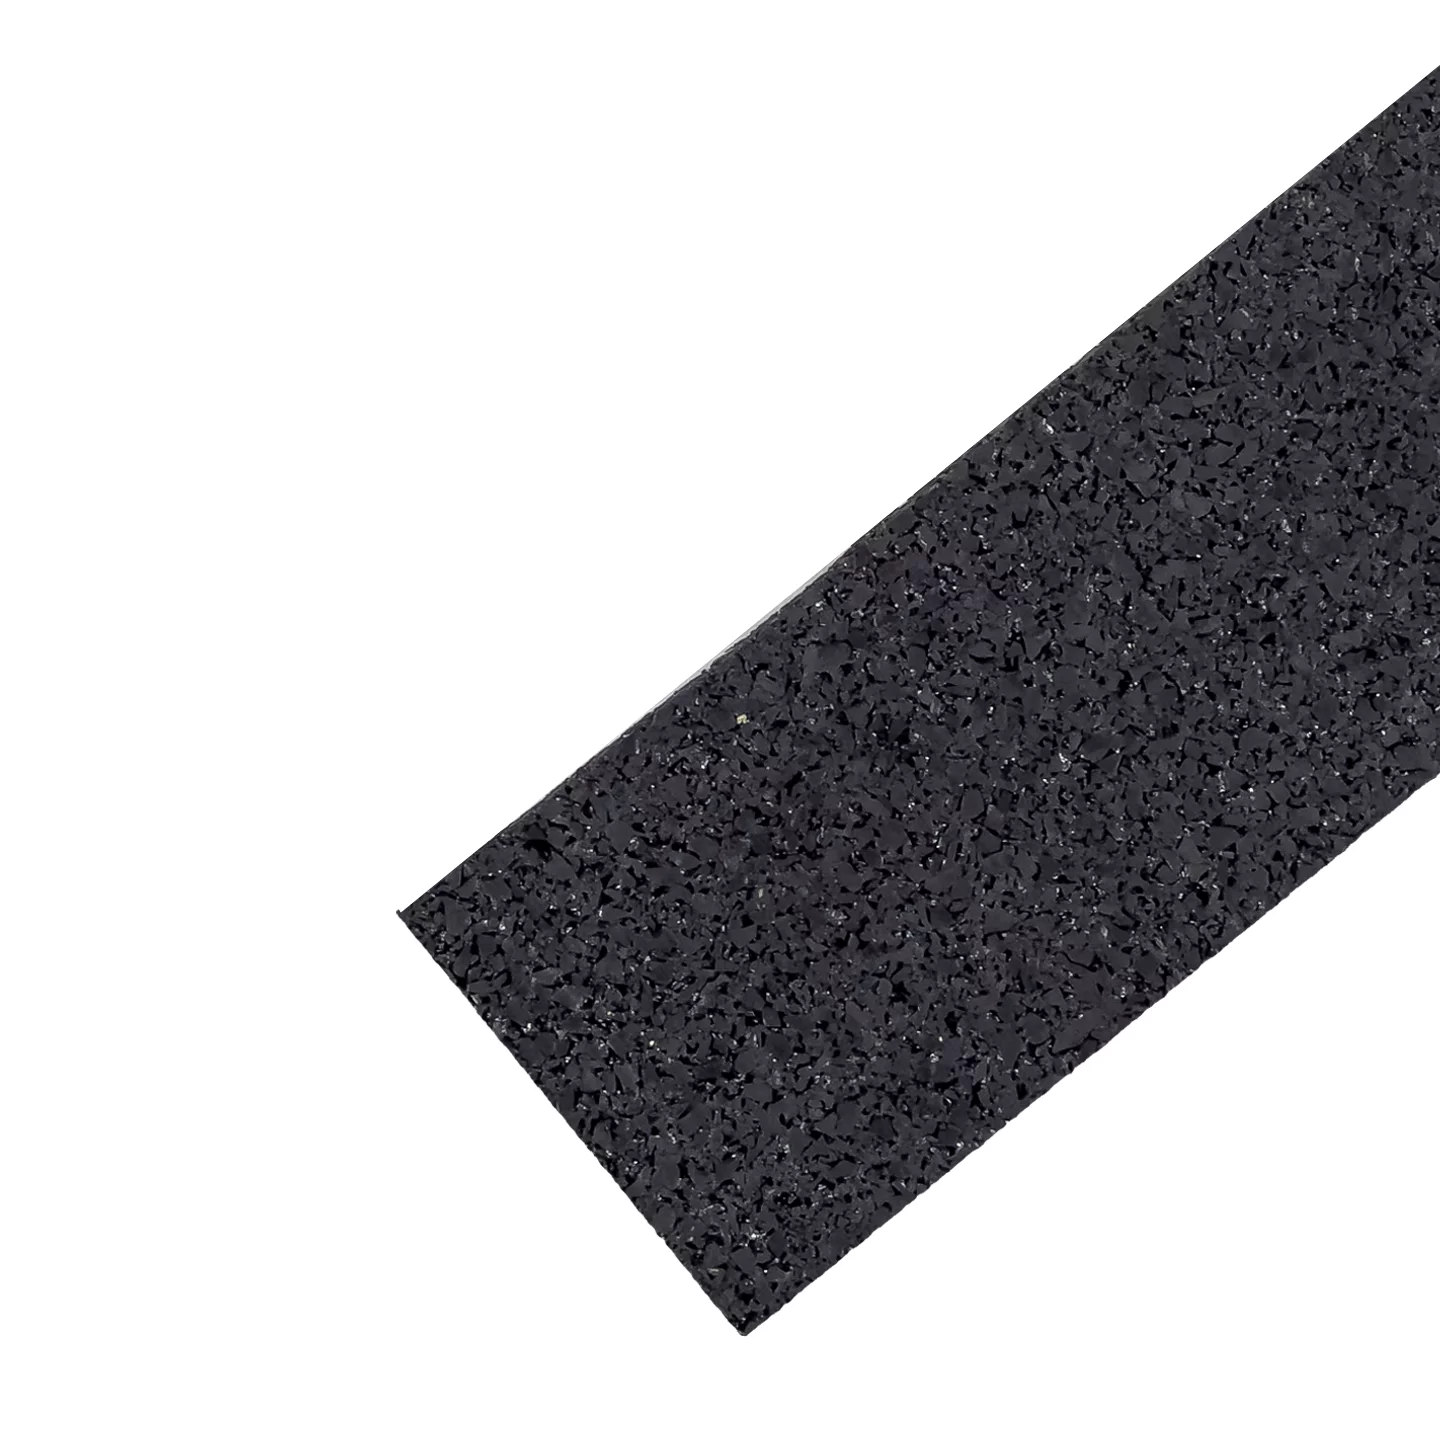 Gumová univerzálna podložka (pás, preložka) FLOMA UniPad - dĺžka 200 cm, šírka 8 cm, výška 0,5 cm